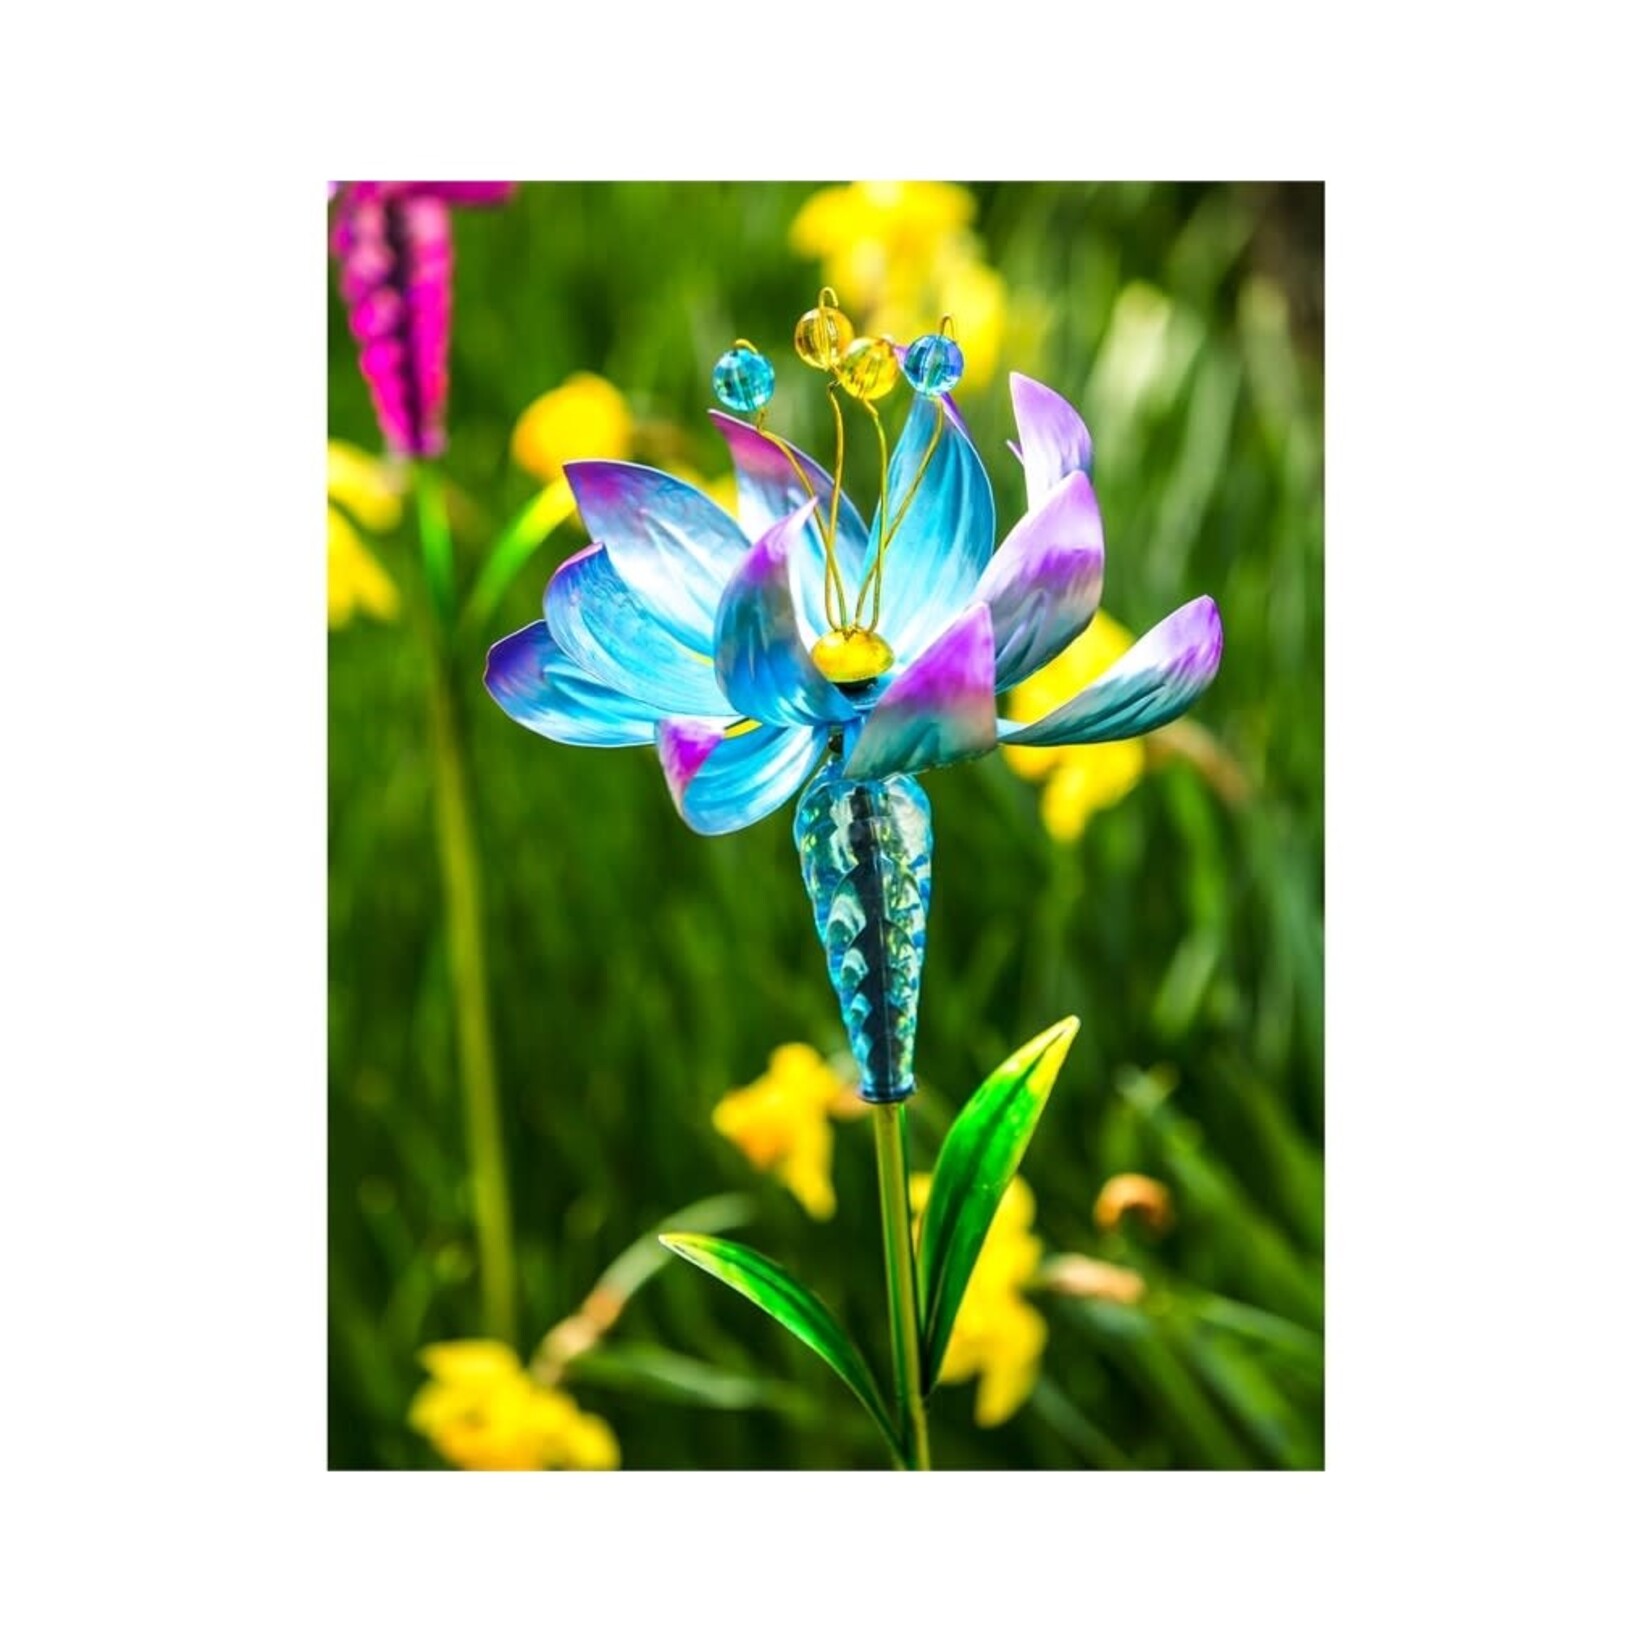 Lotus Flower Spinner Stake - Blue